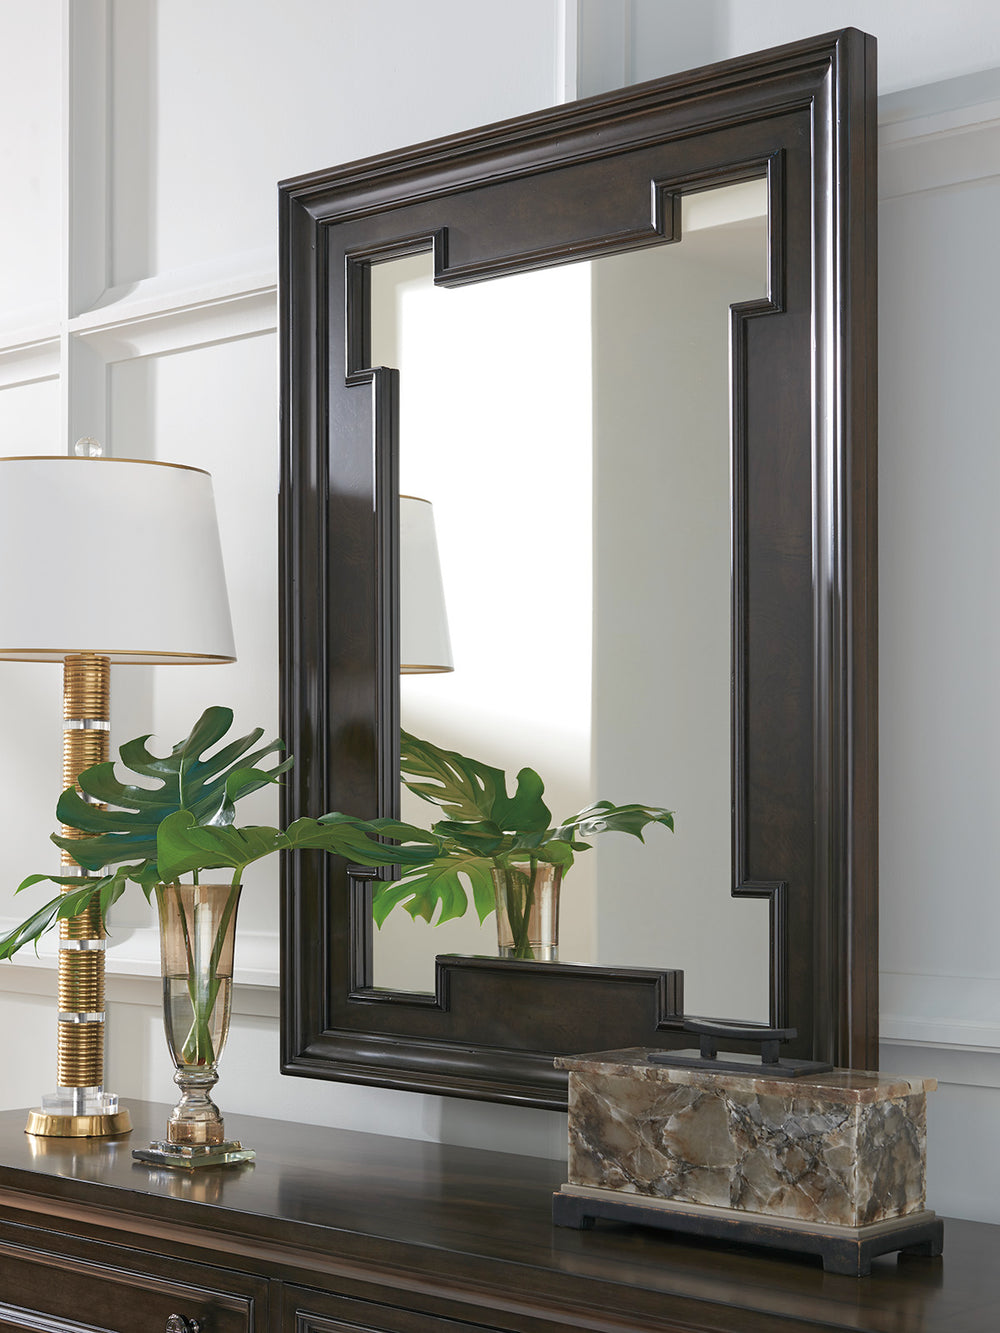 American Home Furniture | Barclay Butera  - Brentwood Highwood Rectangular Mirror